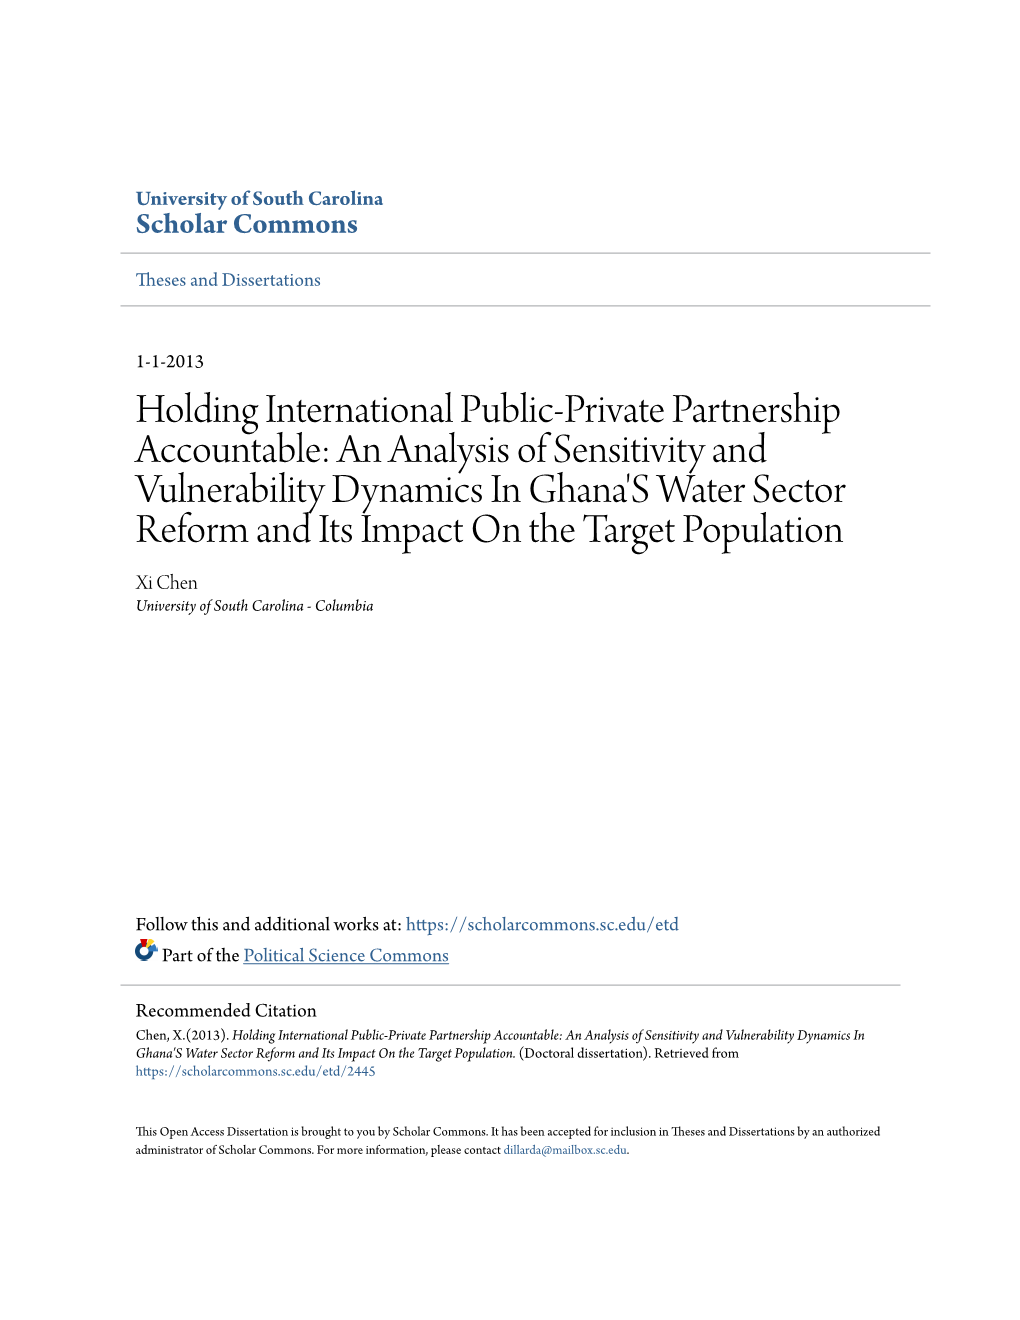 Holding International Public-Private Partnership